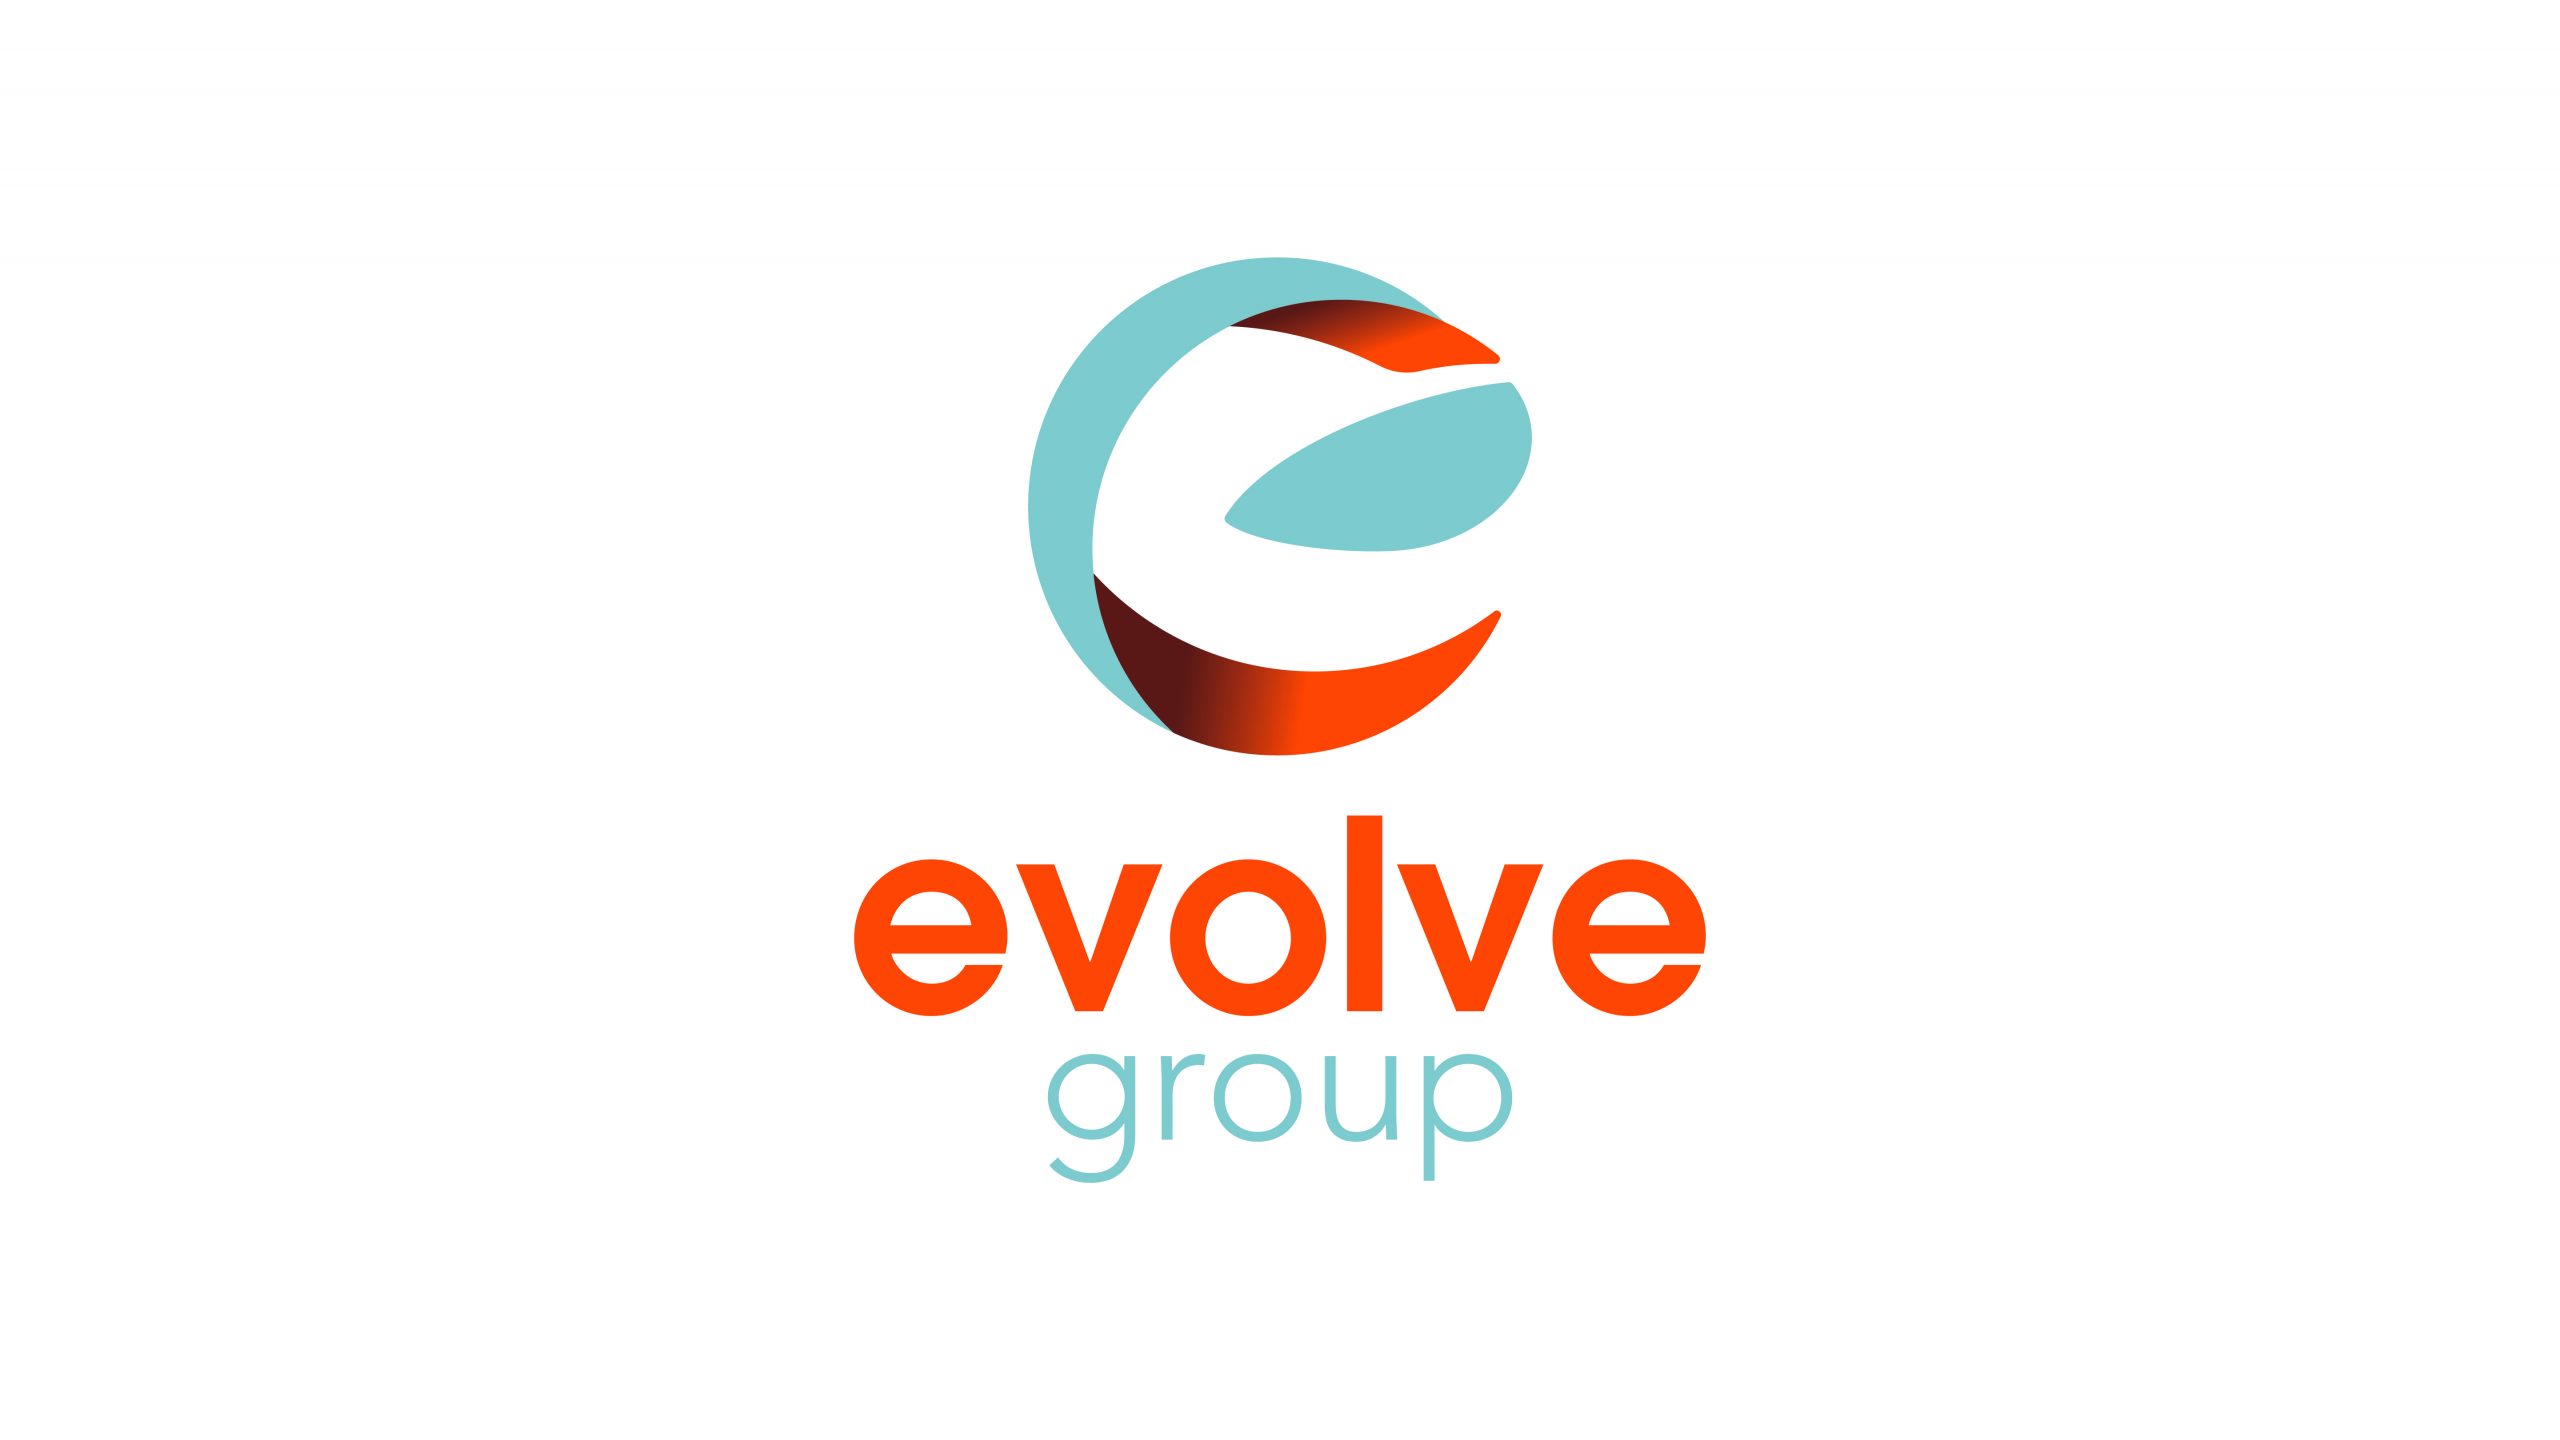 evolve group | Square